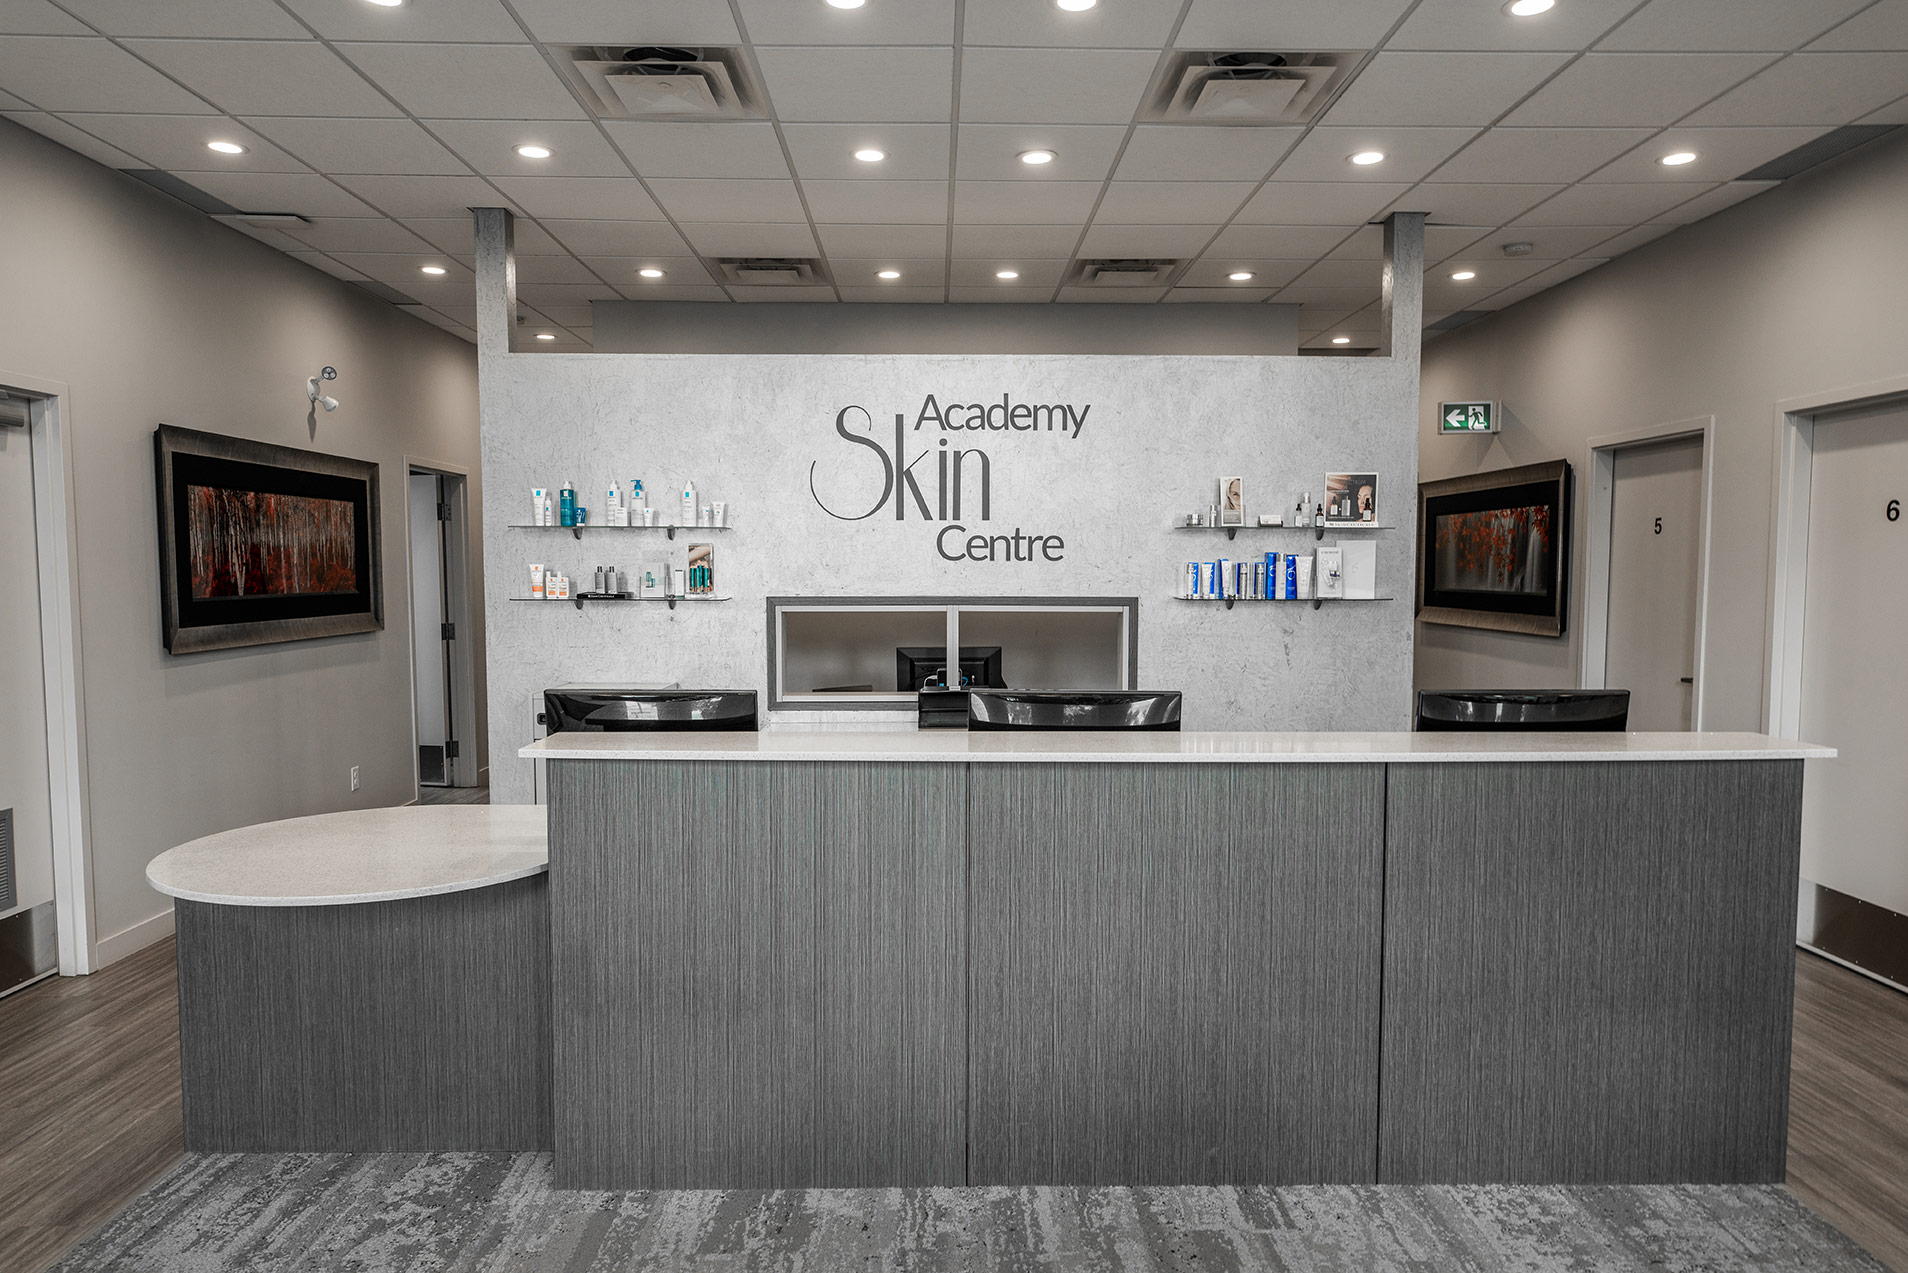 Academy Skin Centre Reception Desk